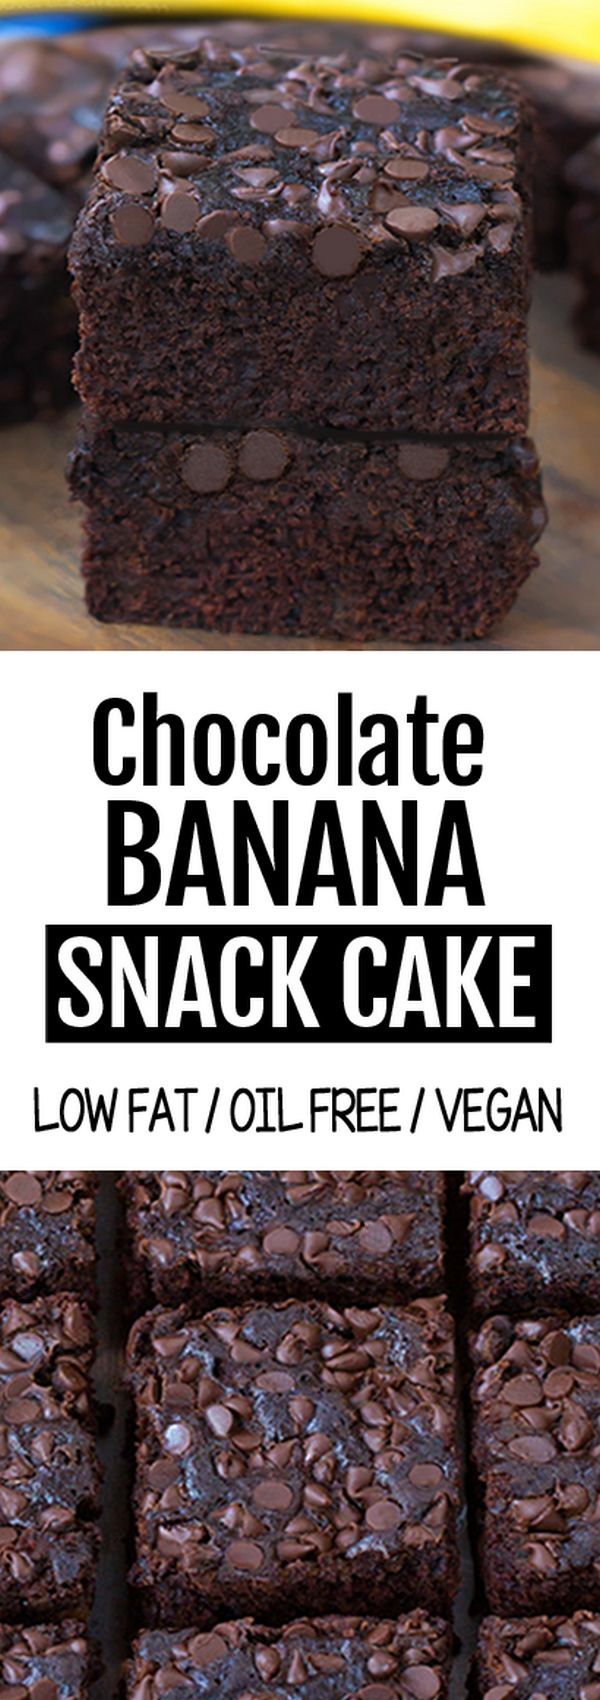 Chocolate Banana Snack Cake Recipe